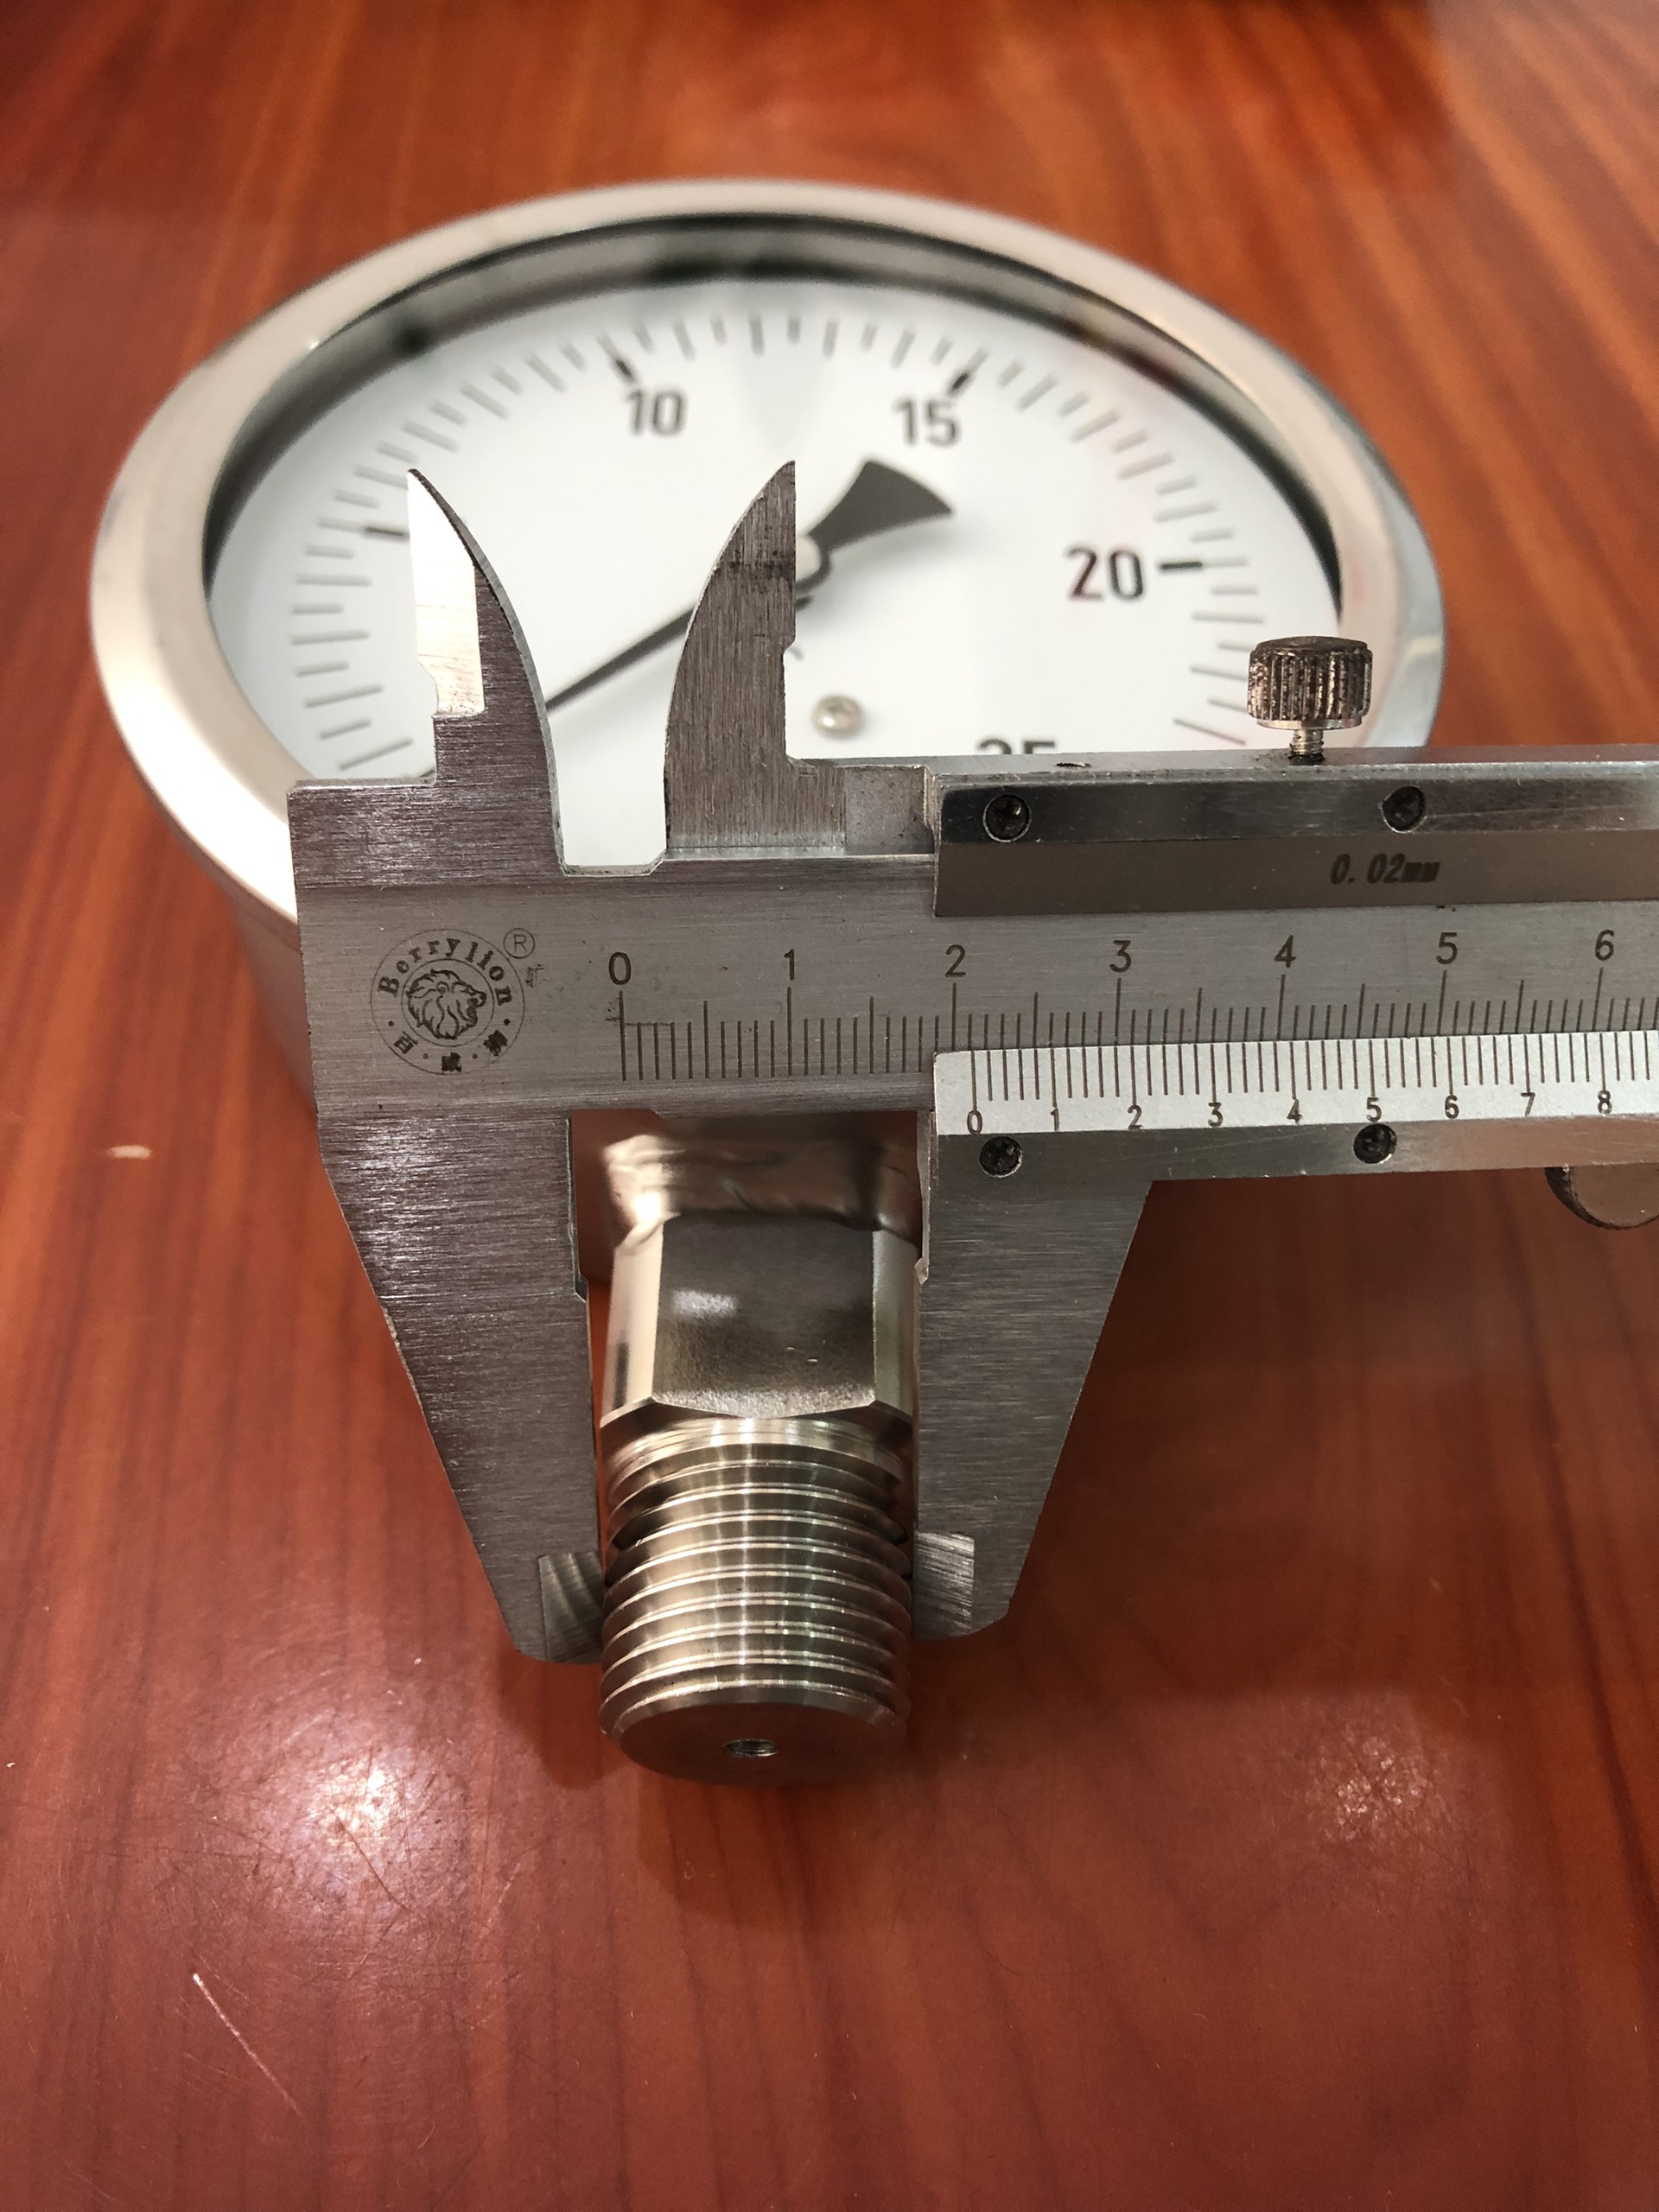 Dụng cụ đo áp suất P255-100A - dãy đo Mpa / Kgf/cm2